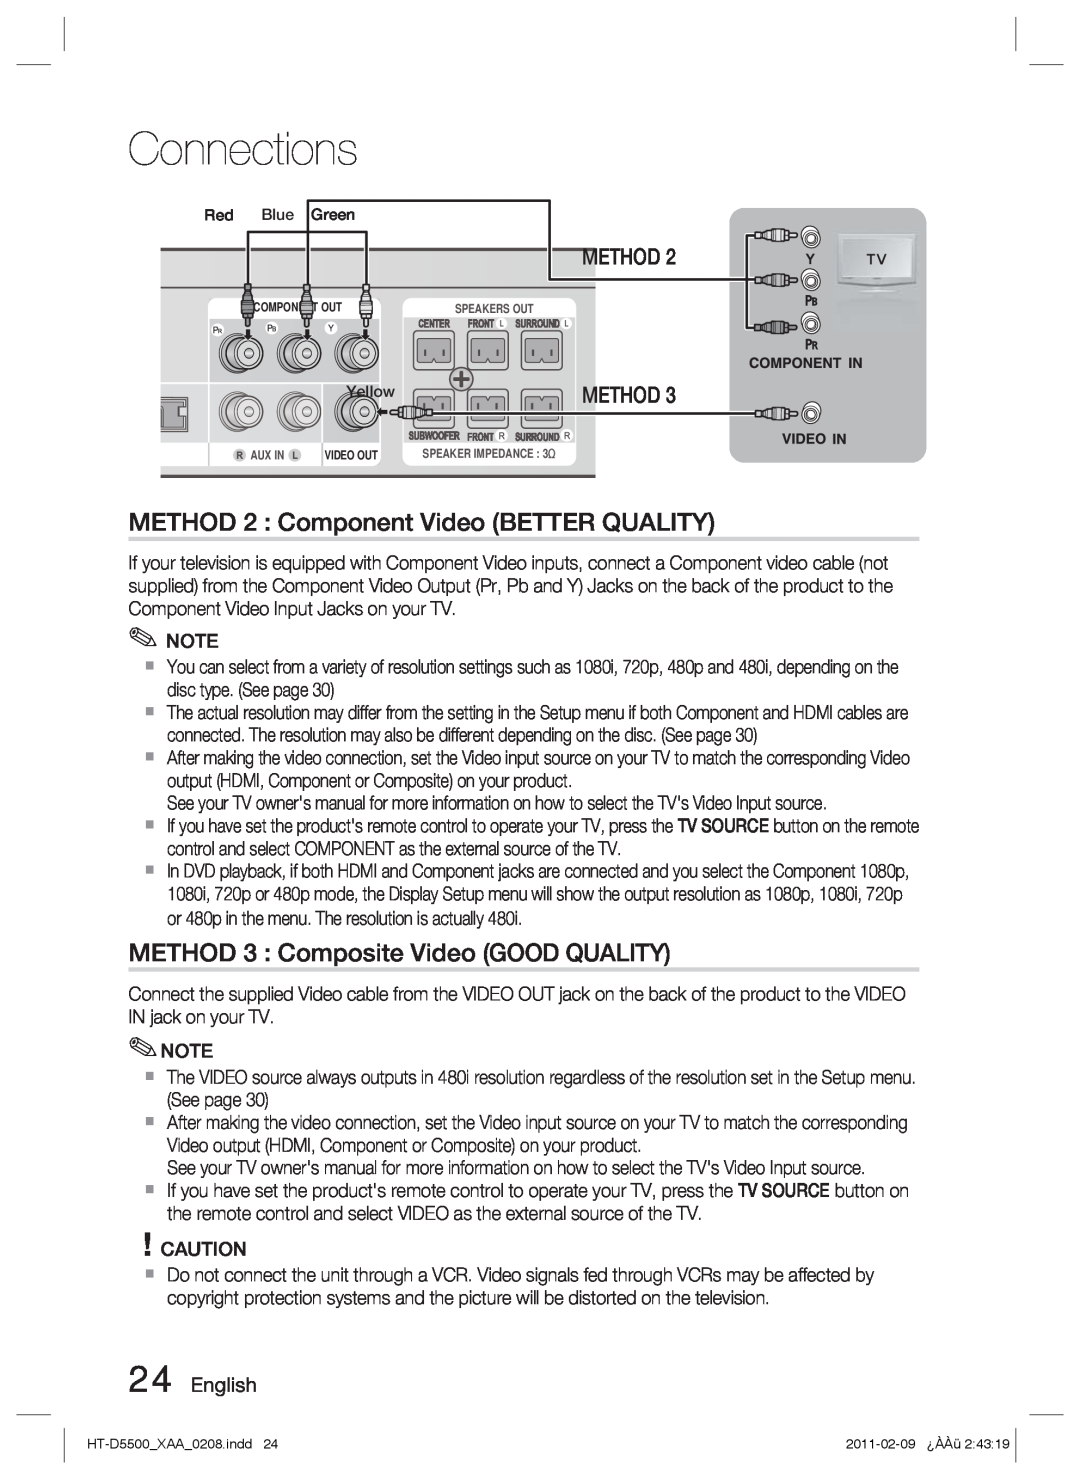 Samsung D5500 METHOD 2 : Component Video BETTER QUALITY, METHOD 3 : Composite Video GOOD QUALITY, Connections, Method 